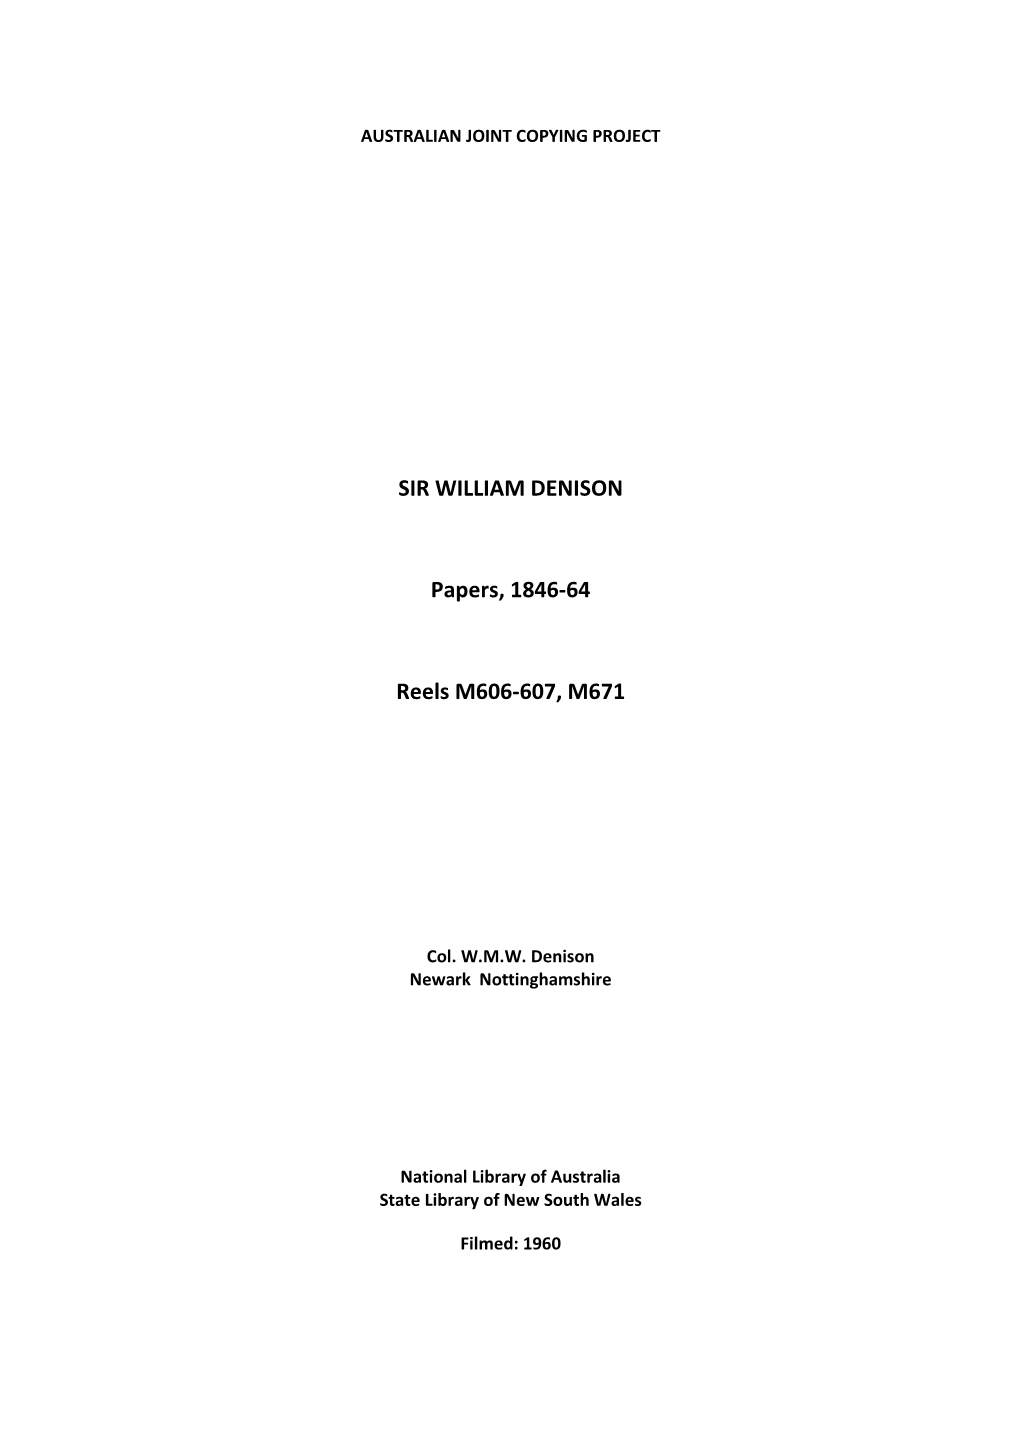 SIR WILLIAM DENISON Papers, 1846-64 Reels M606-607, M671